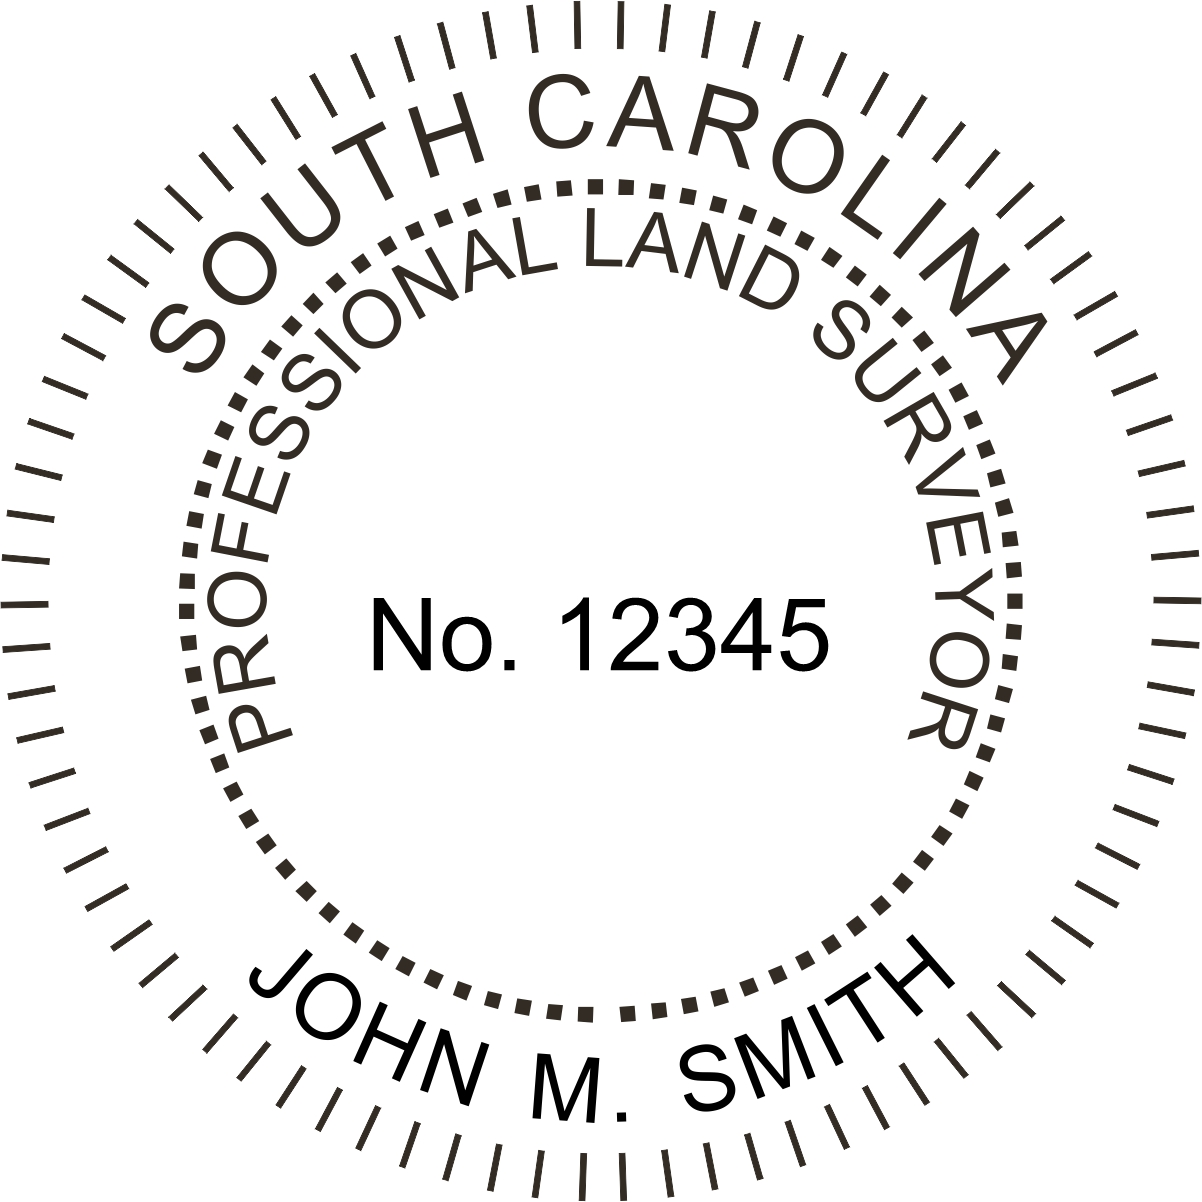 land surveyor stamp - south carolina